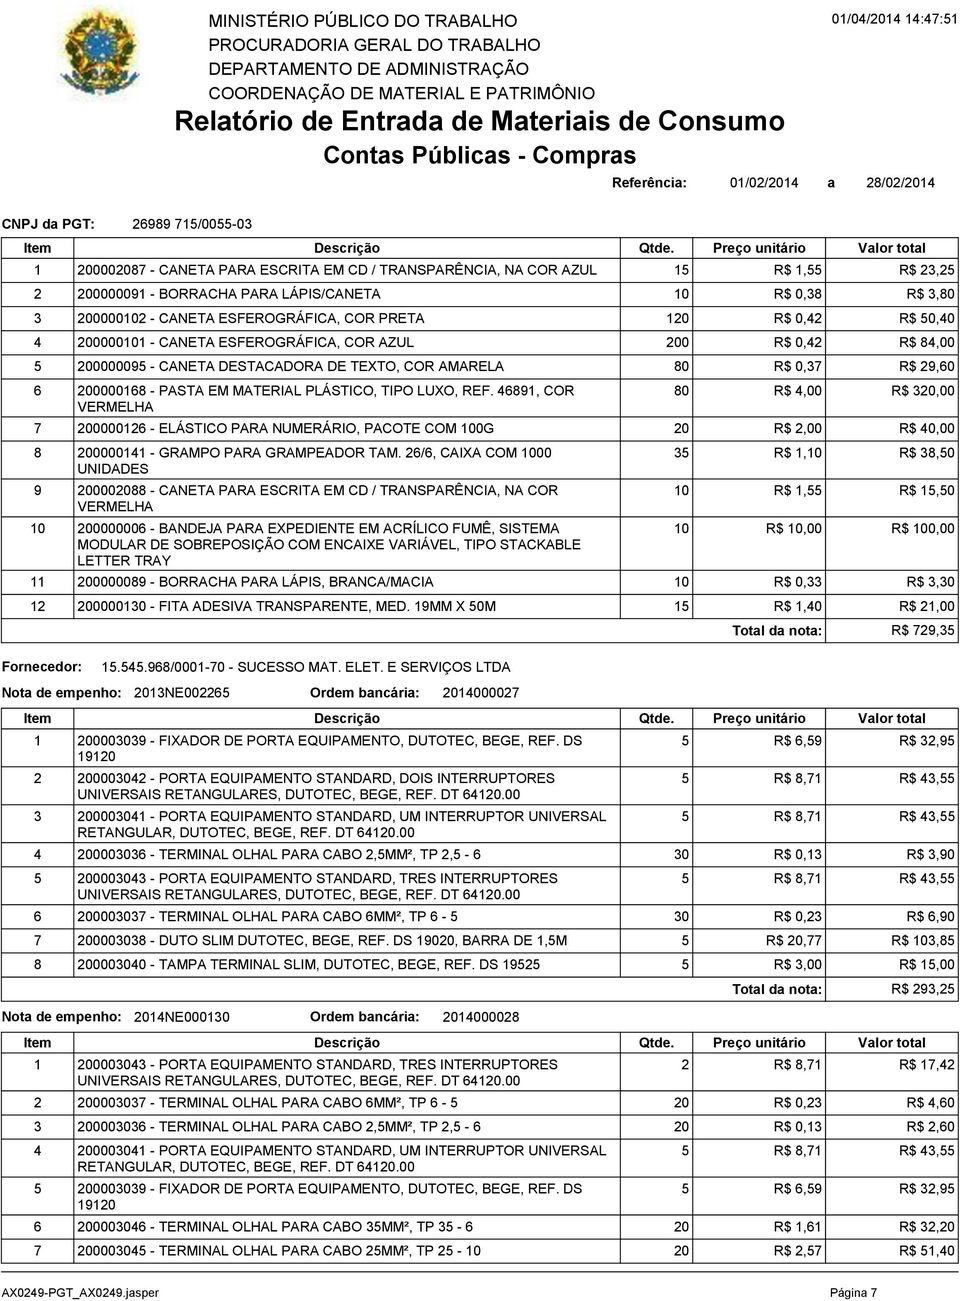 DESTACADORA DE TEXTO, COR AMARELA 80 R$ 0,37 R$ 29,60 6 200000168 - PASTA EM MATERIAL PLÁSTICO, TIPO LUXO, REF.